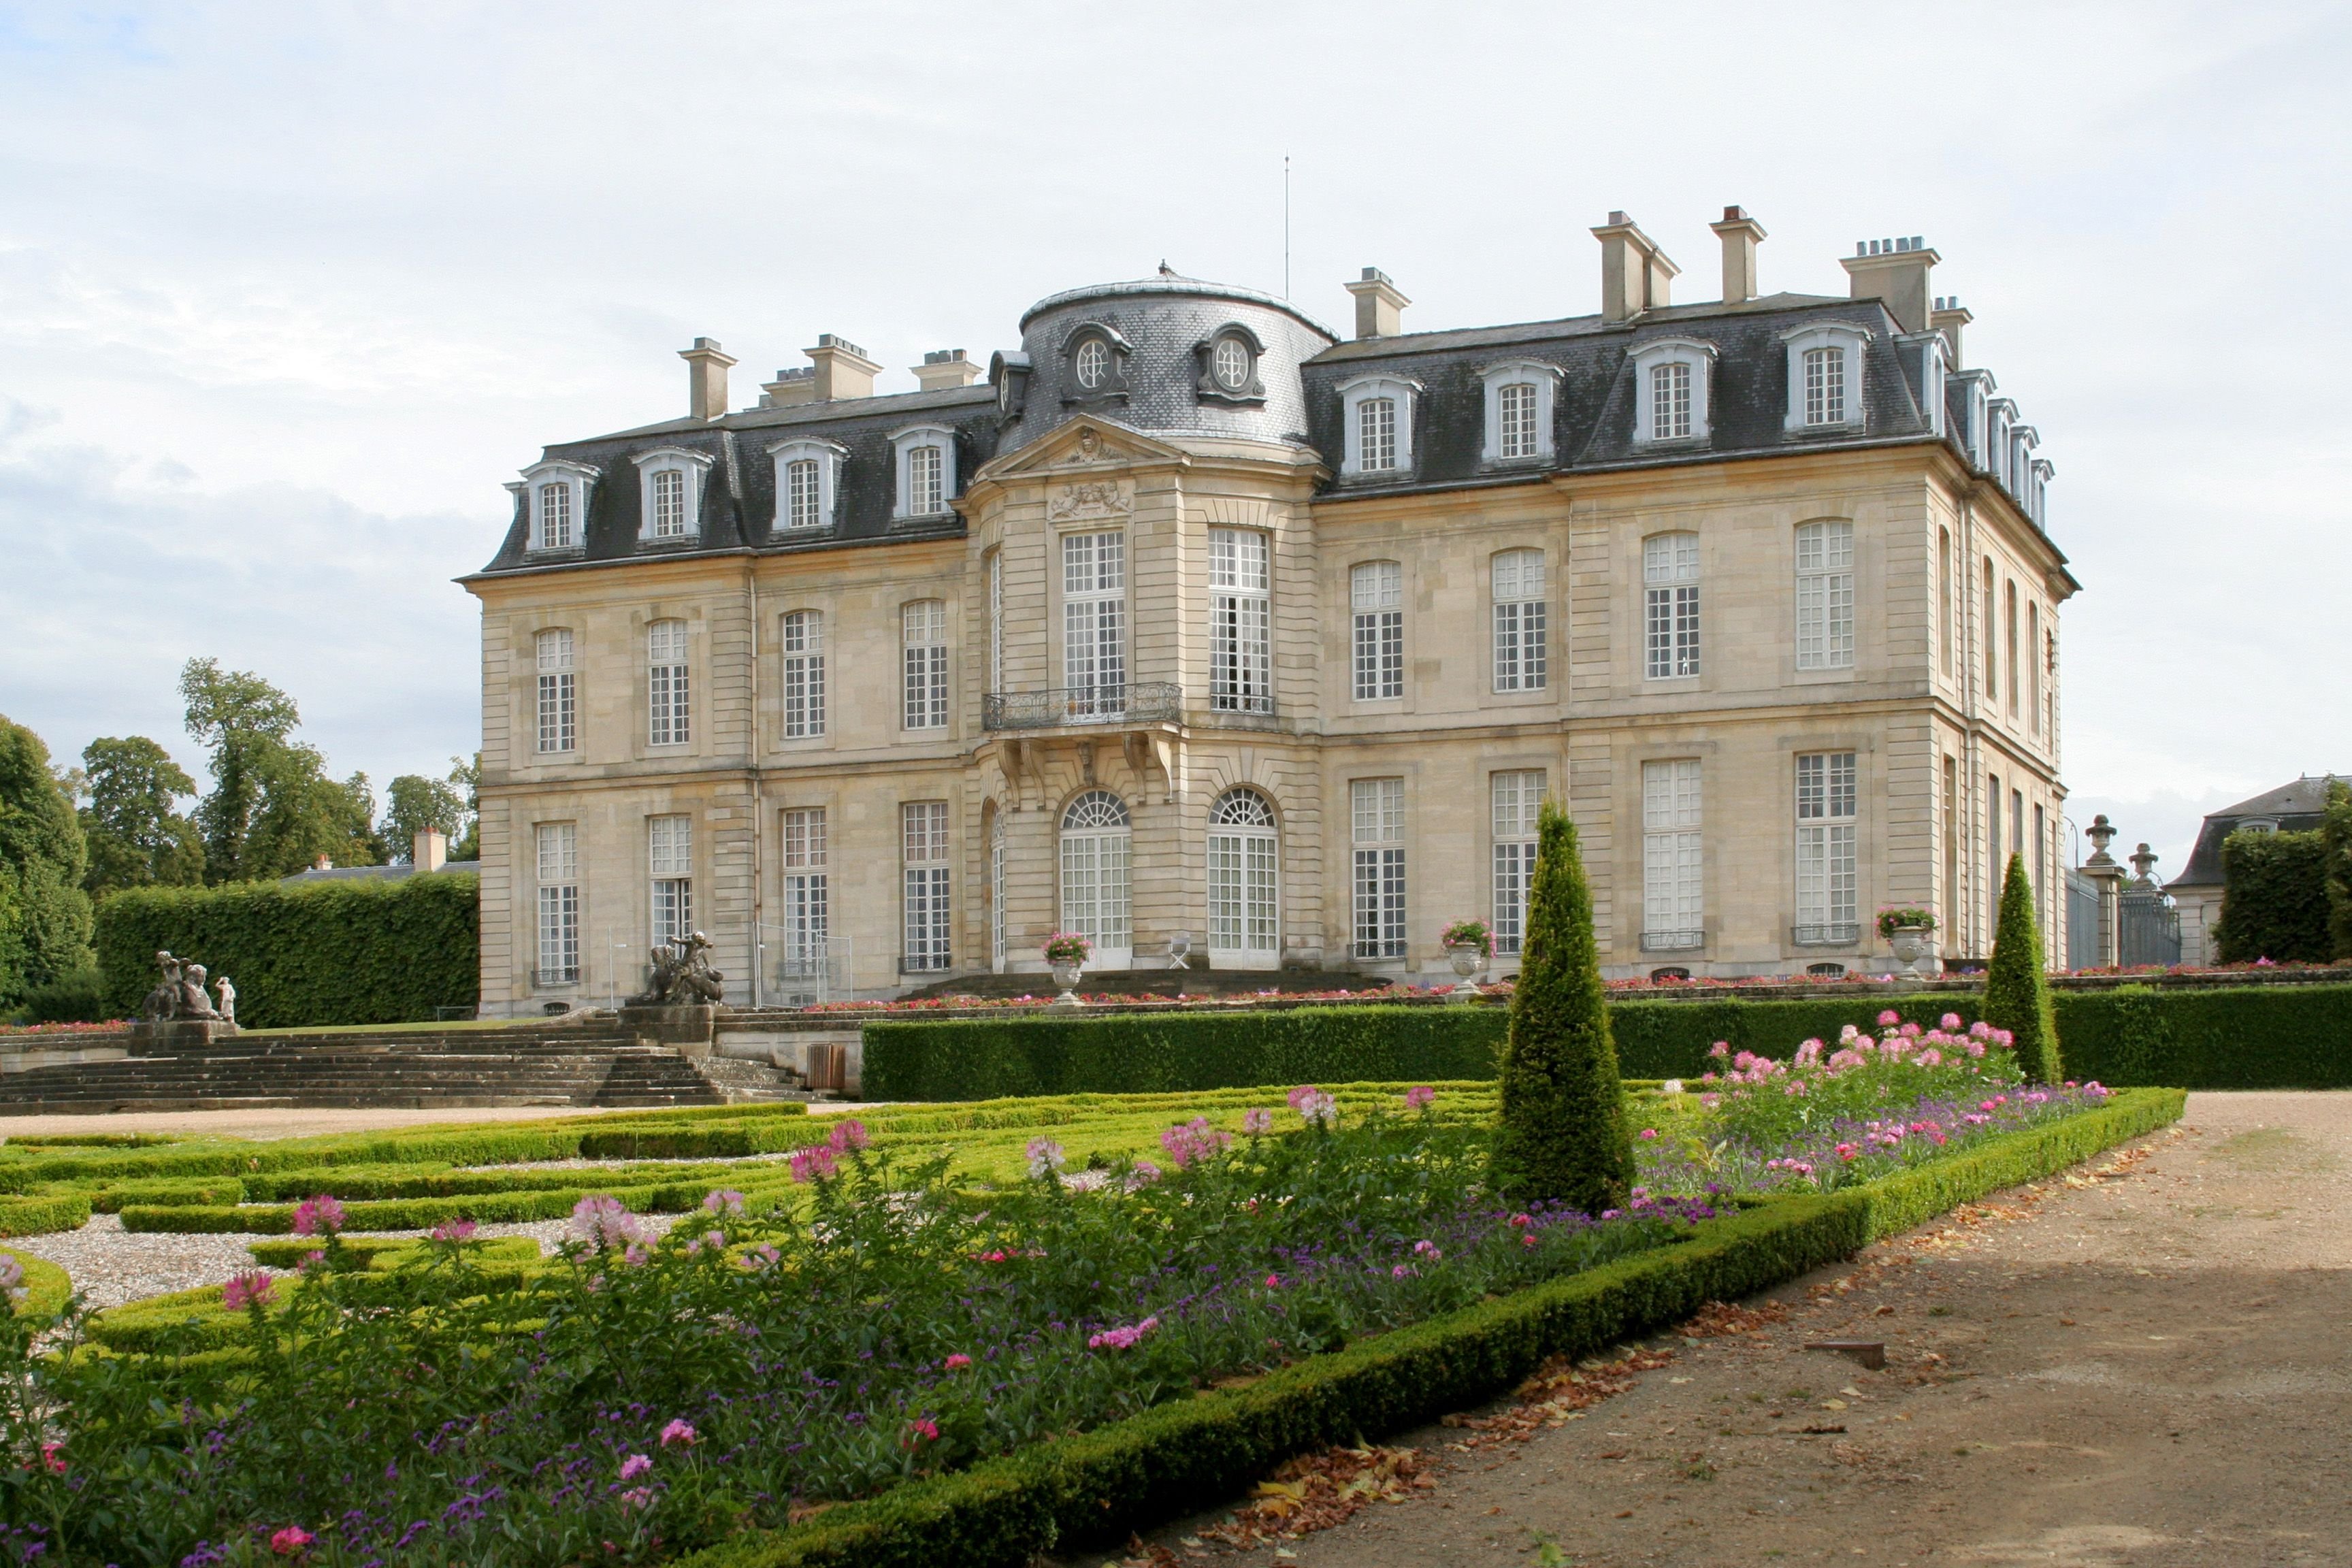 Кому давали поместье. Особняк Мон Флери во Франции. Шан-сюр-Марн (дворец). Замок Менар Франция. Усадьба Франция Шато.